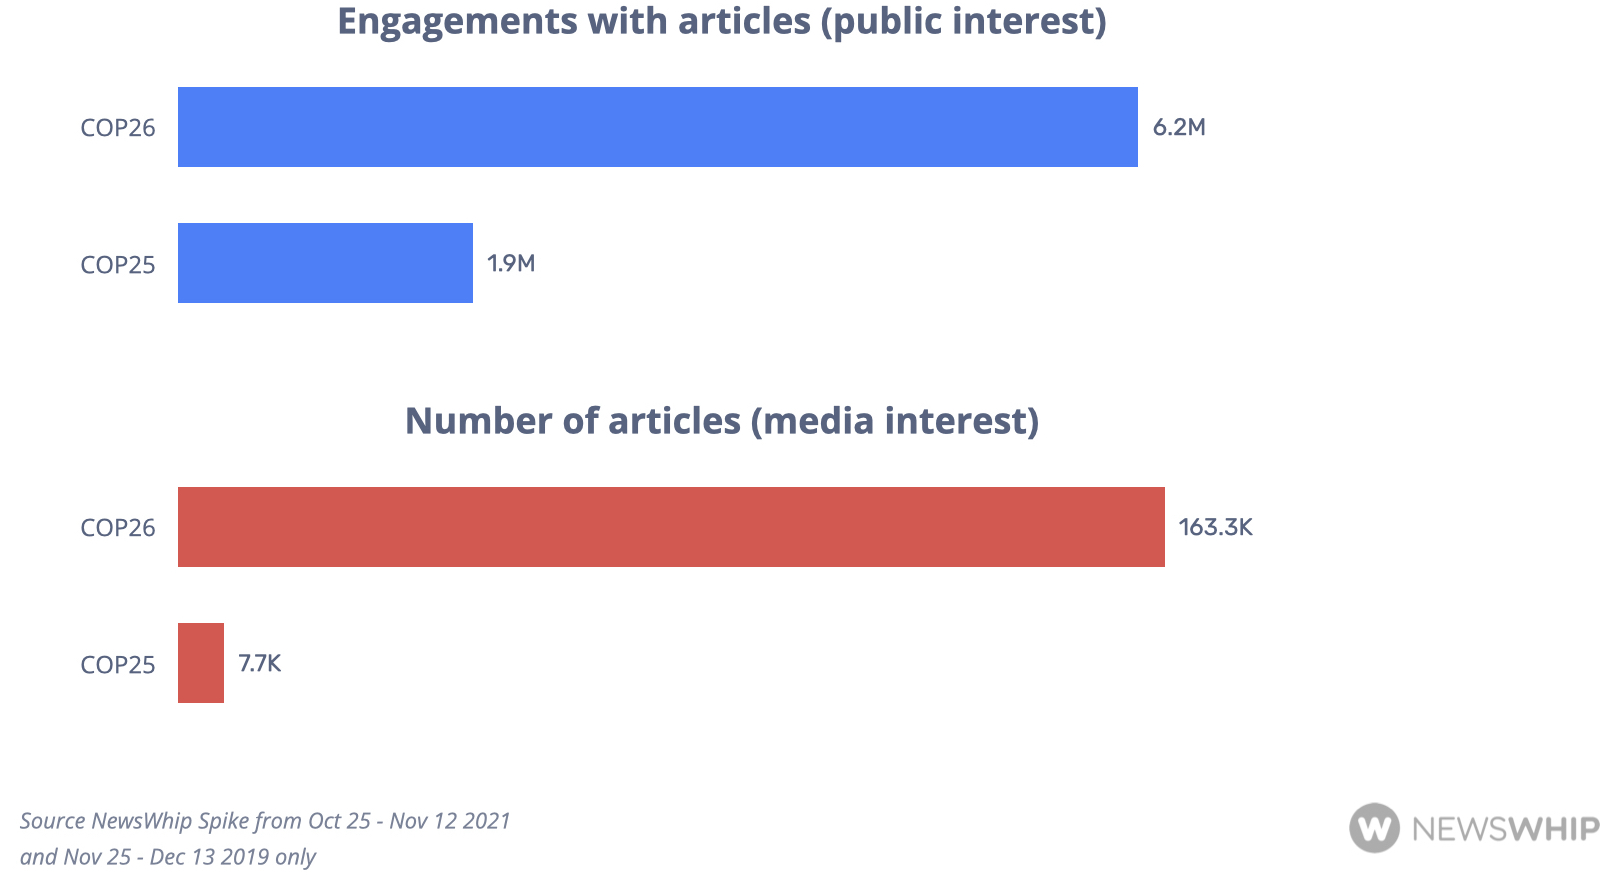 Public interest - Media interest in COP26 vs. COP25